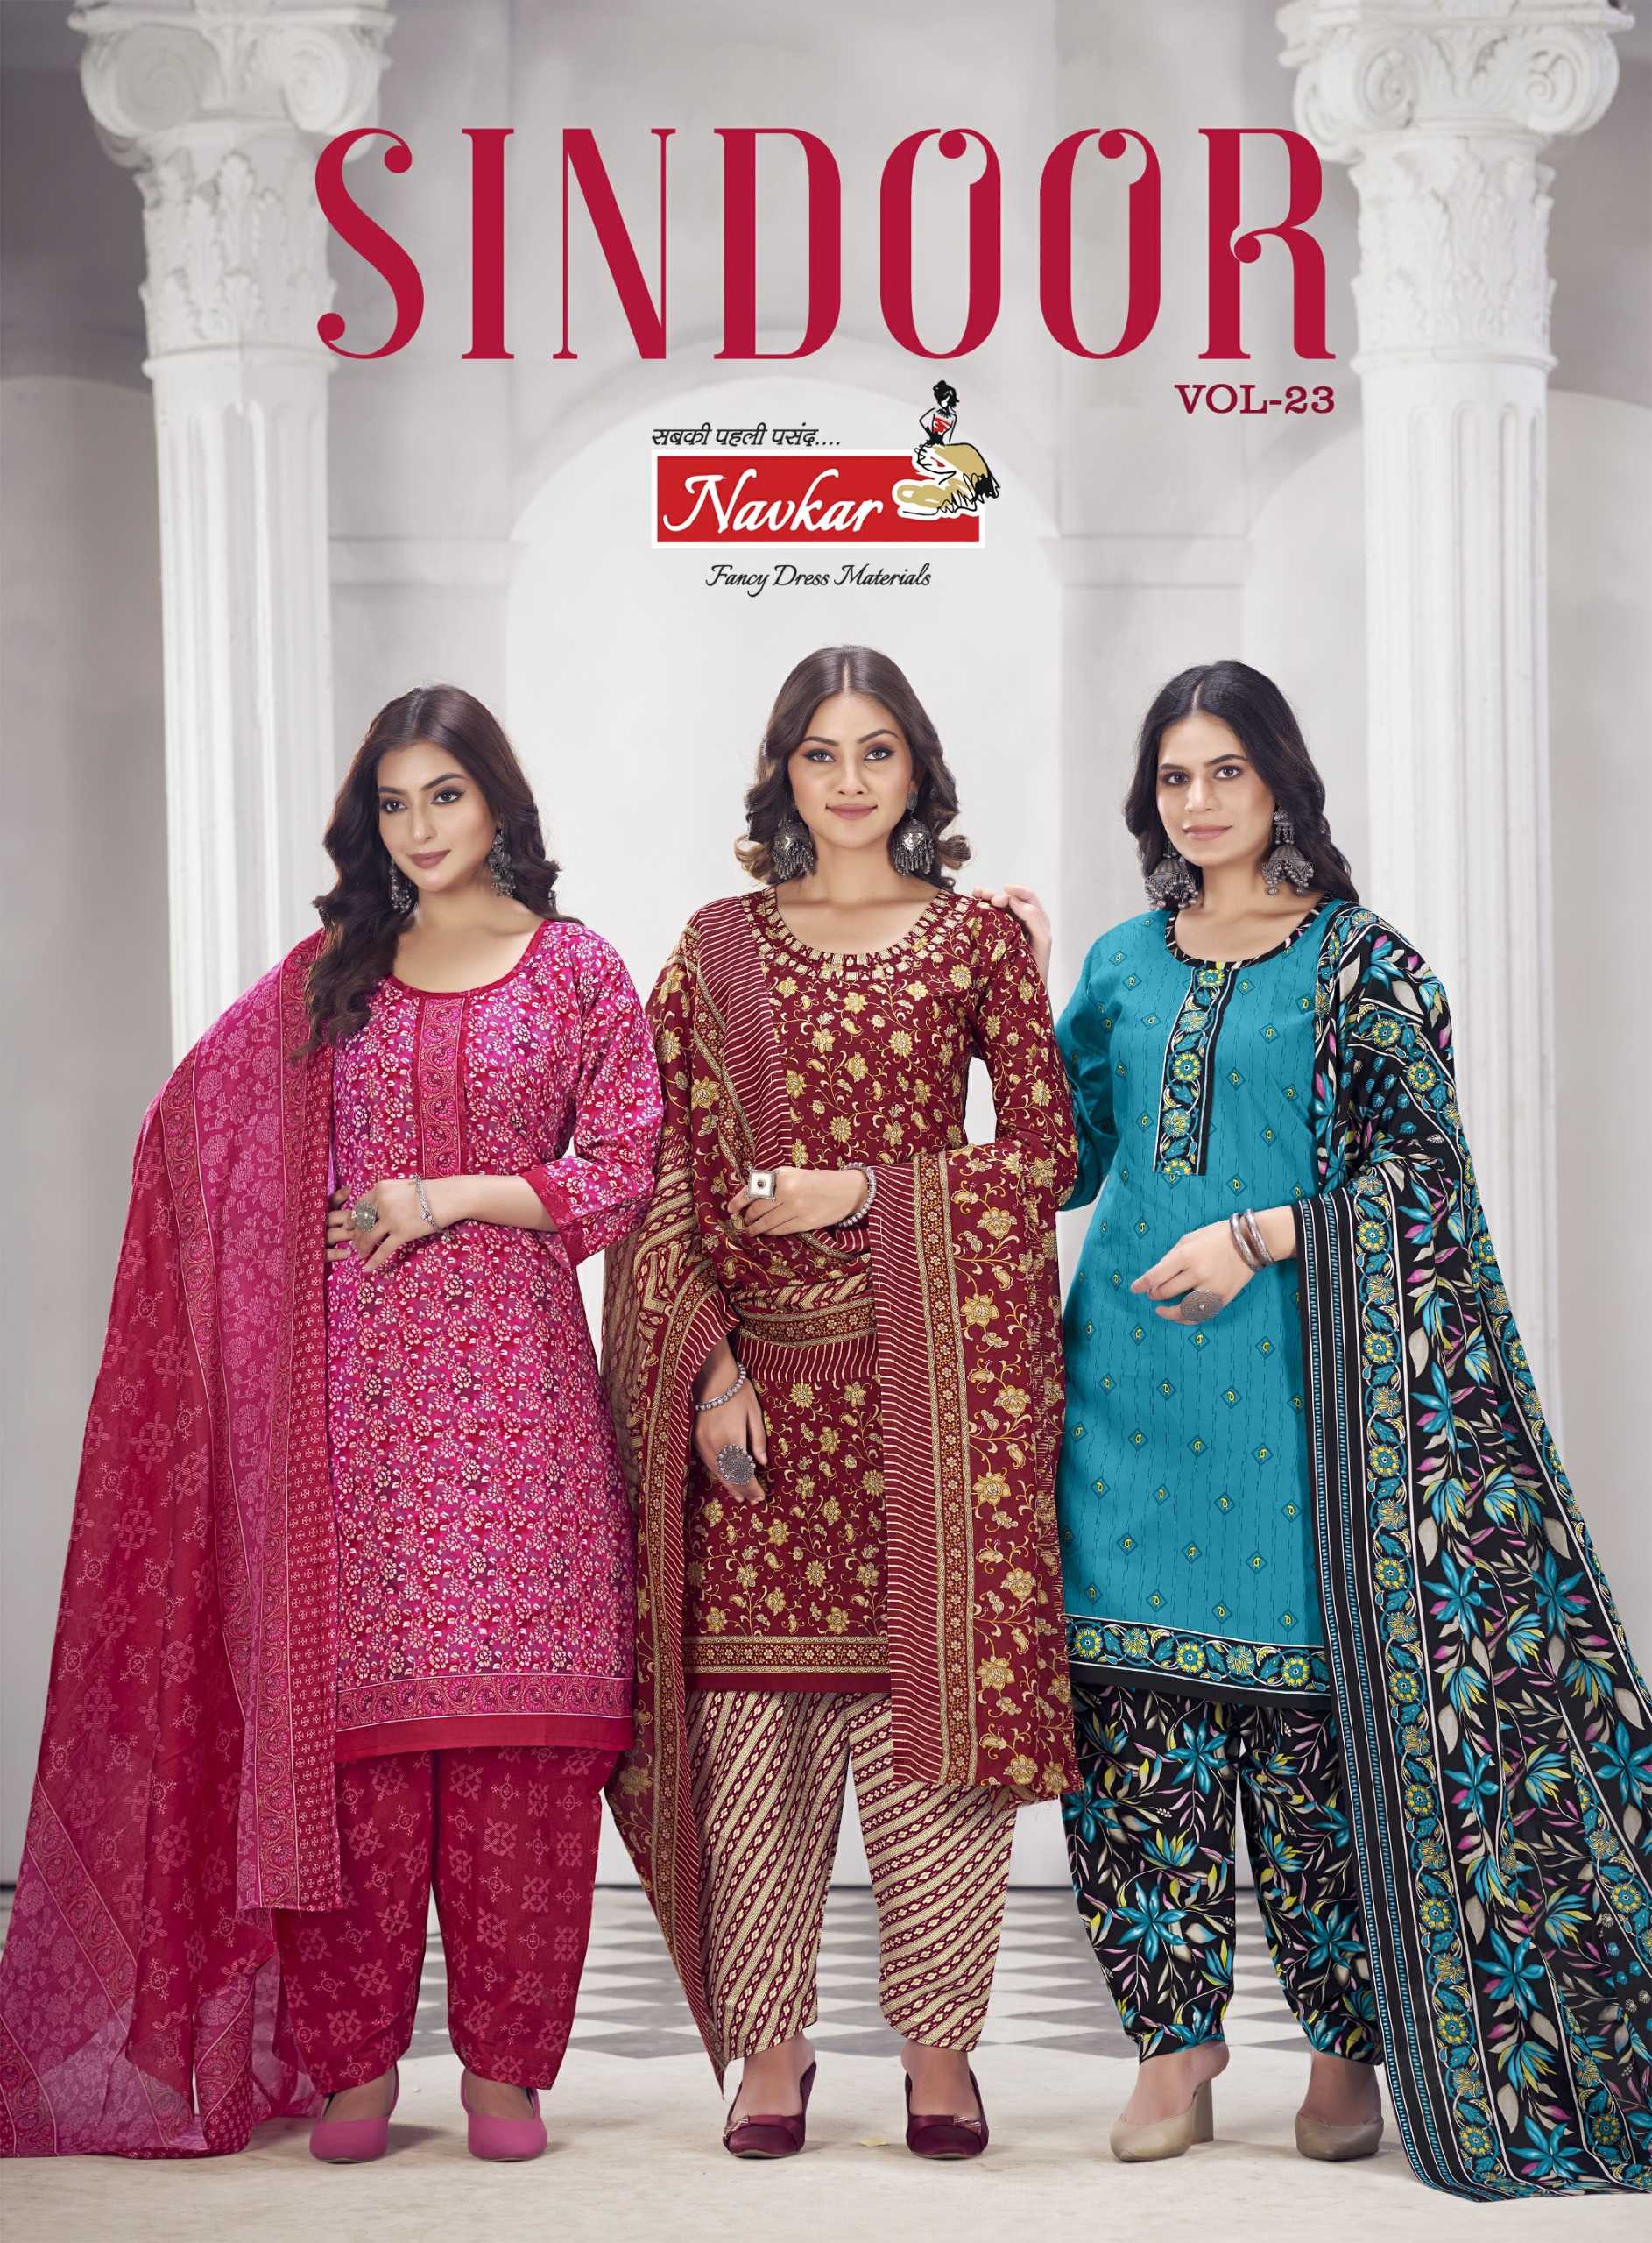 sindoor vol 23 by navkar latest cotton print readymade full stitch salwar suit